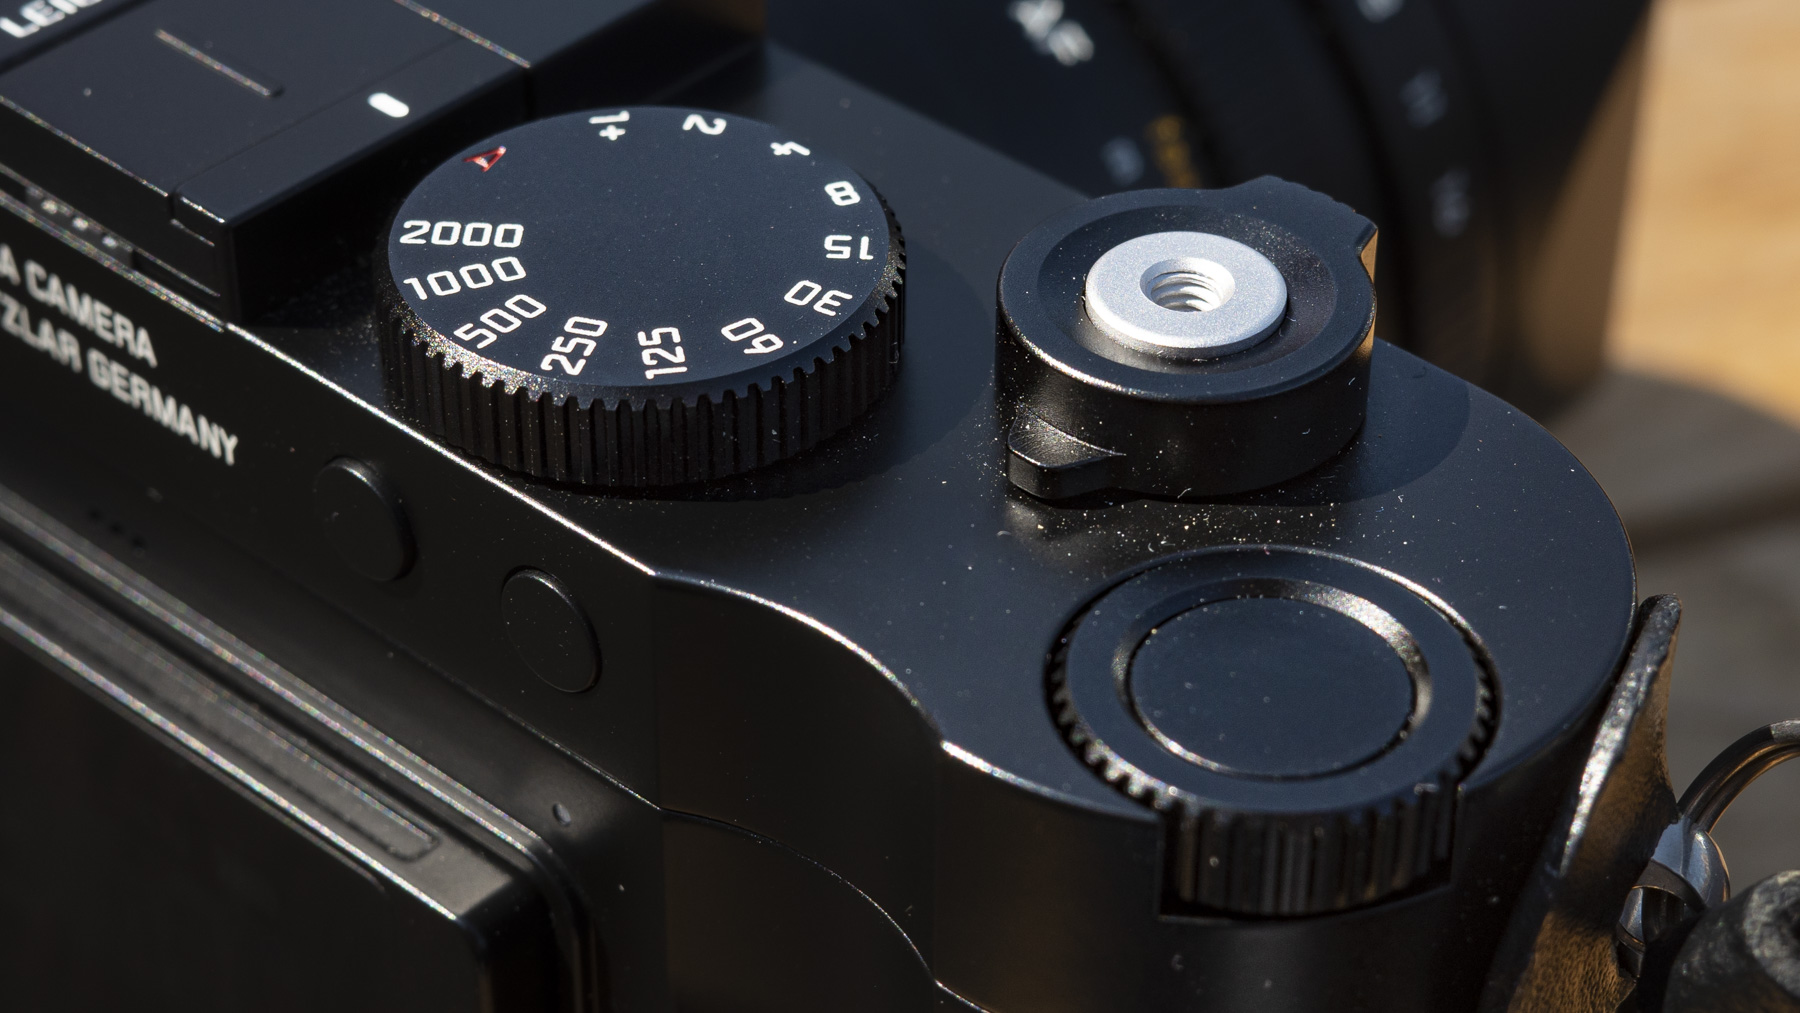 Leica Q3 camera closeup of top plate